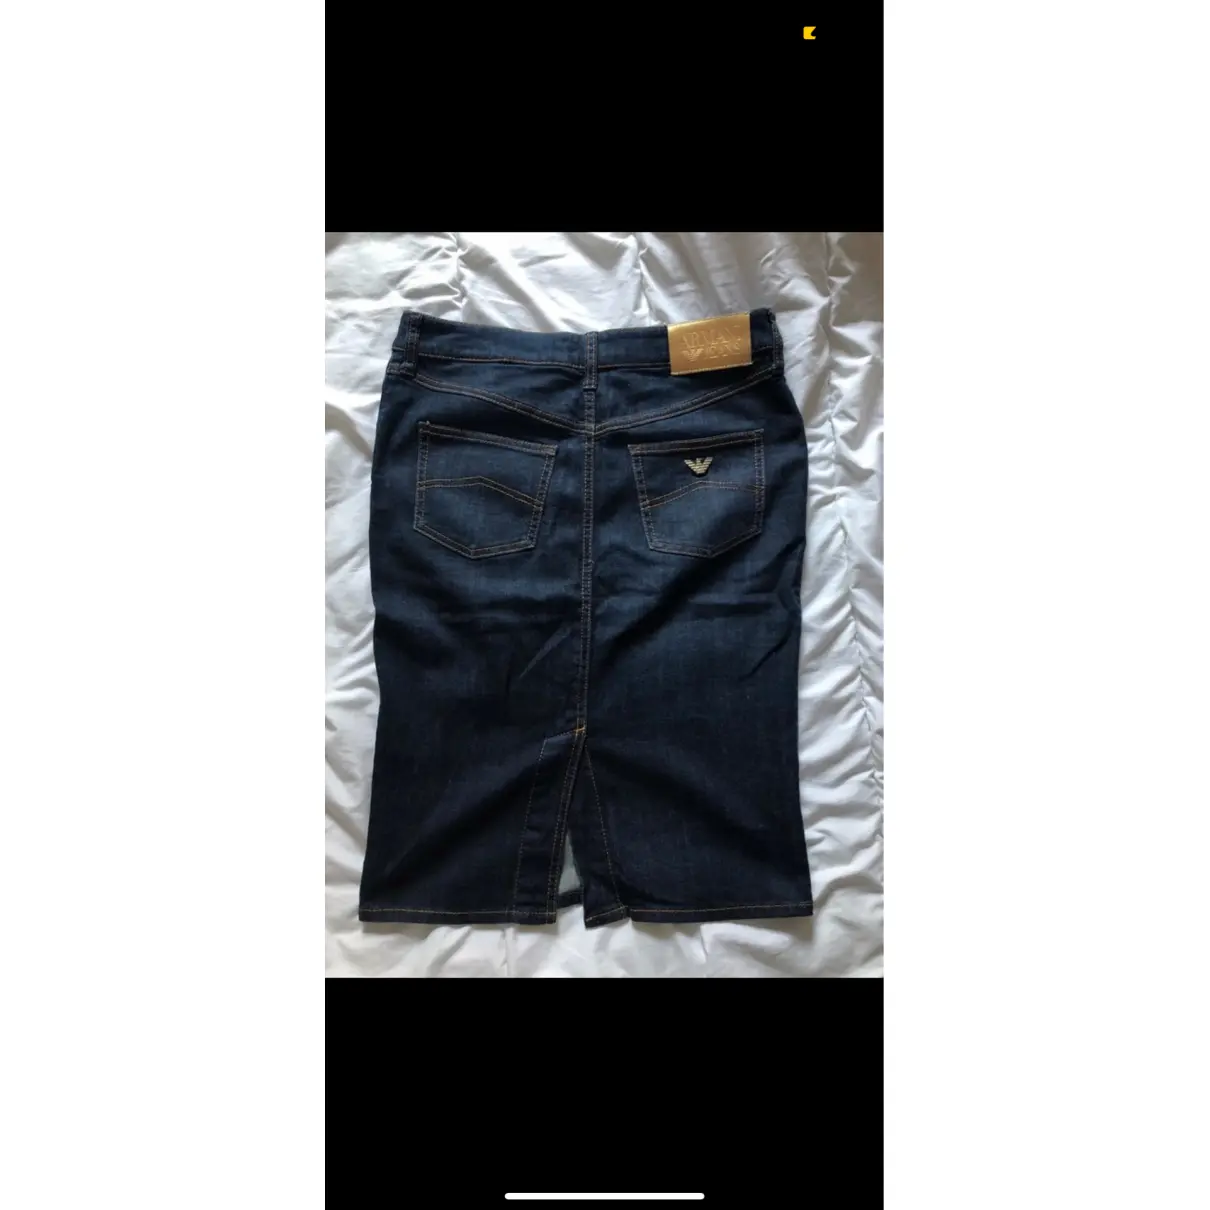 Buy Armani Jeans Skirt online